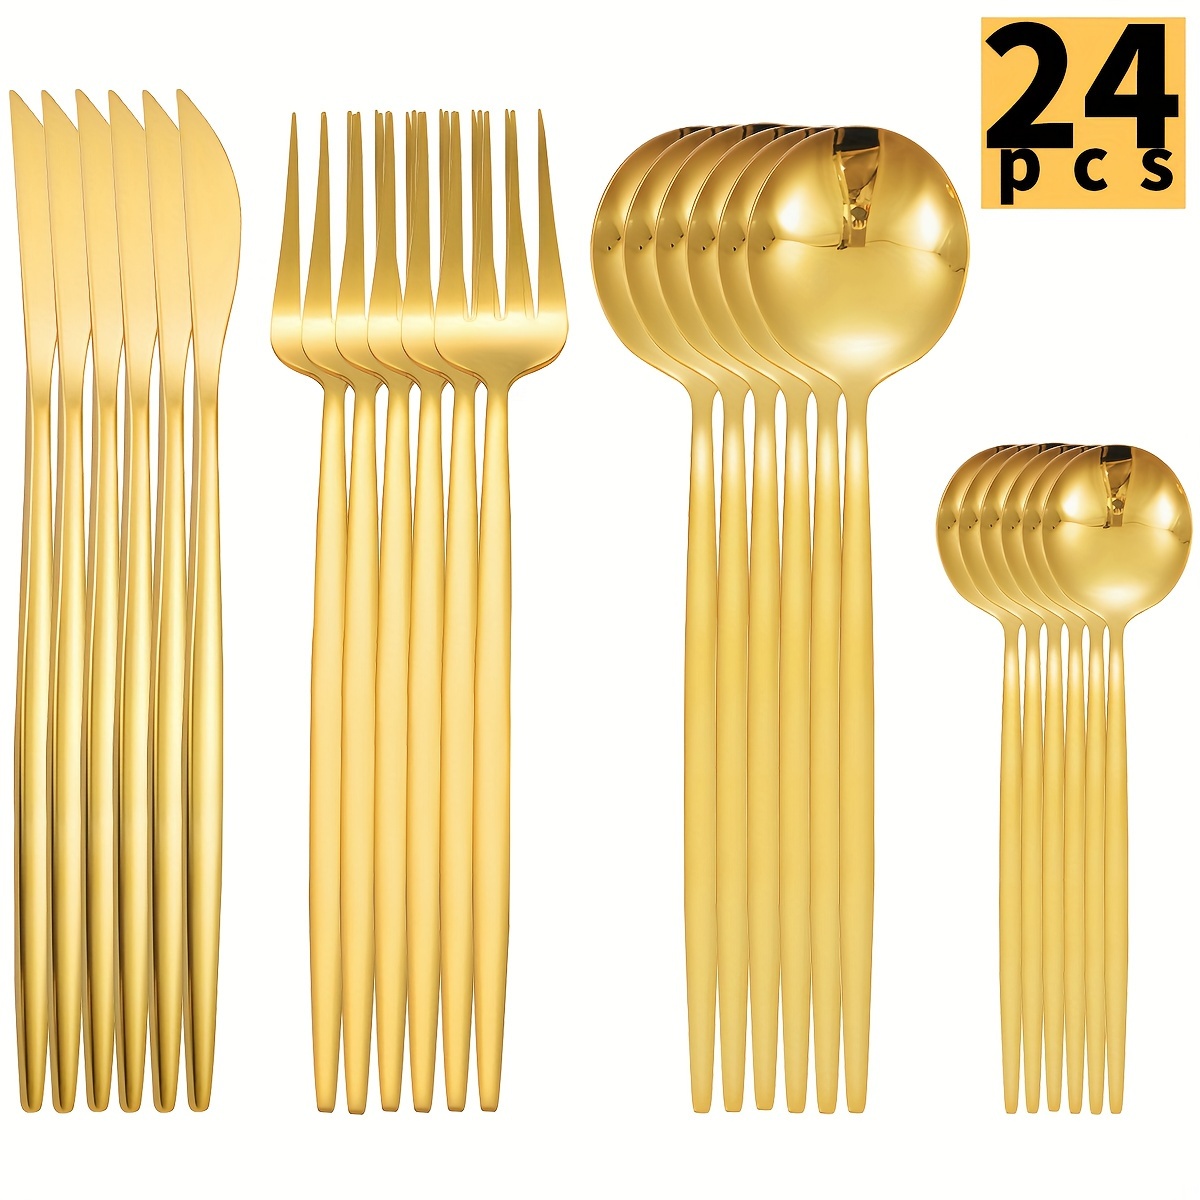 

24pcs Stainless Steel Portuguese Cutlery Set, Include Steak Knife Dinner Fork Dinner Spoon Teaspoon Dessert Spoon, Household Hotel Restaurant Cutlery Set, Kitchen Supplies